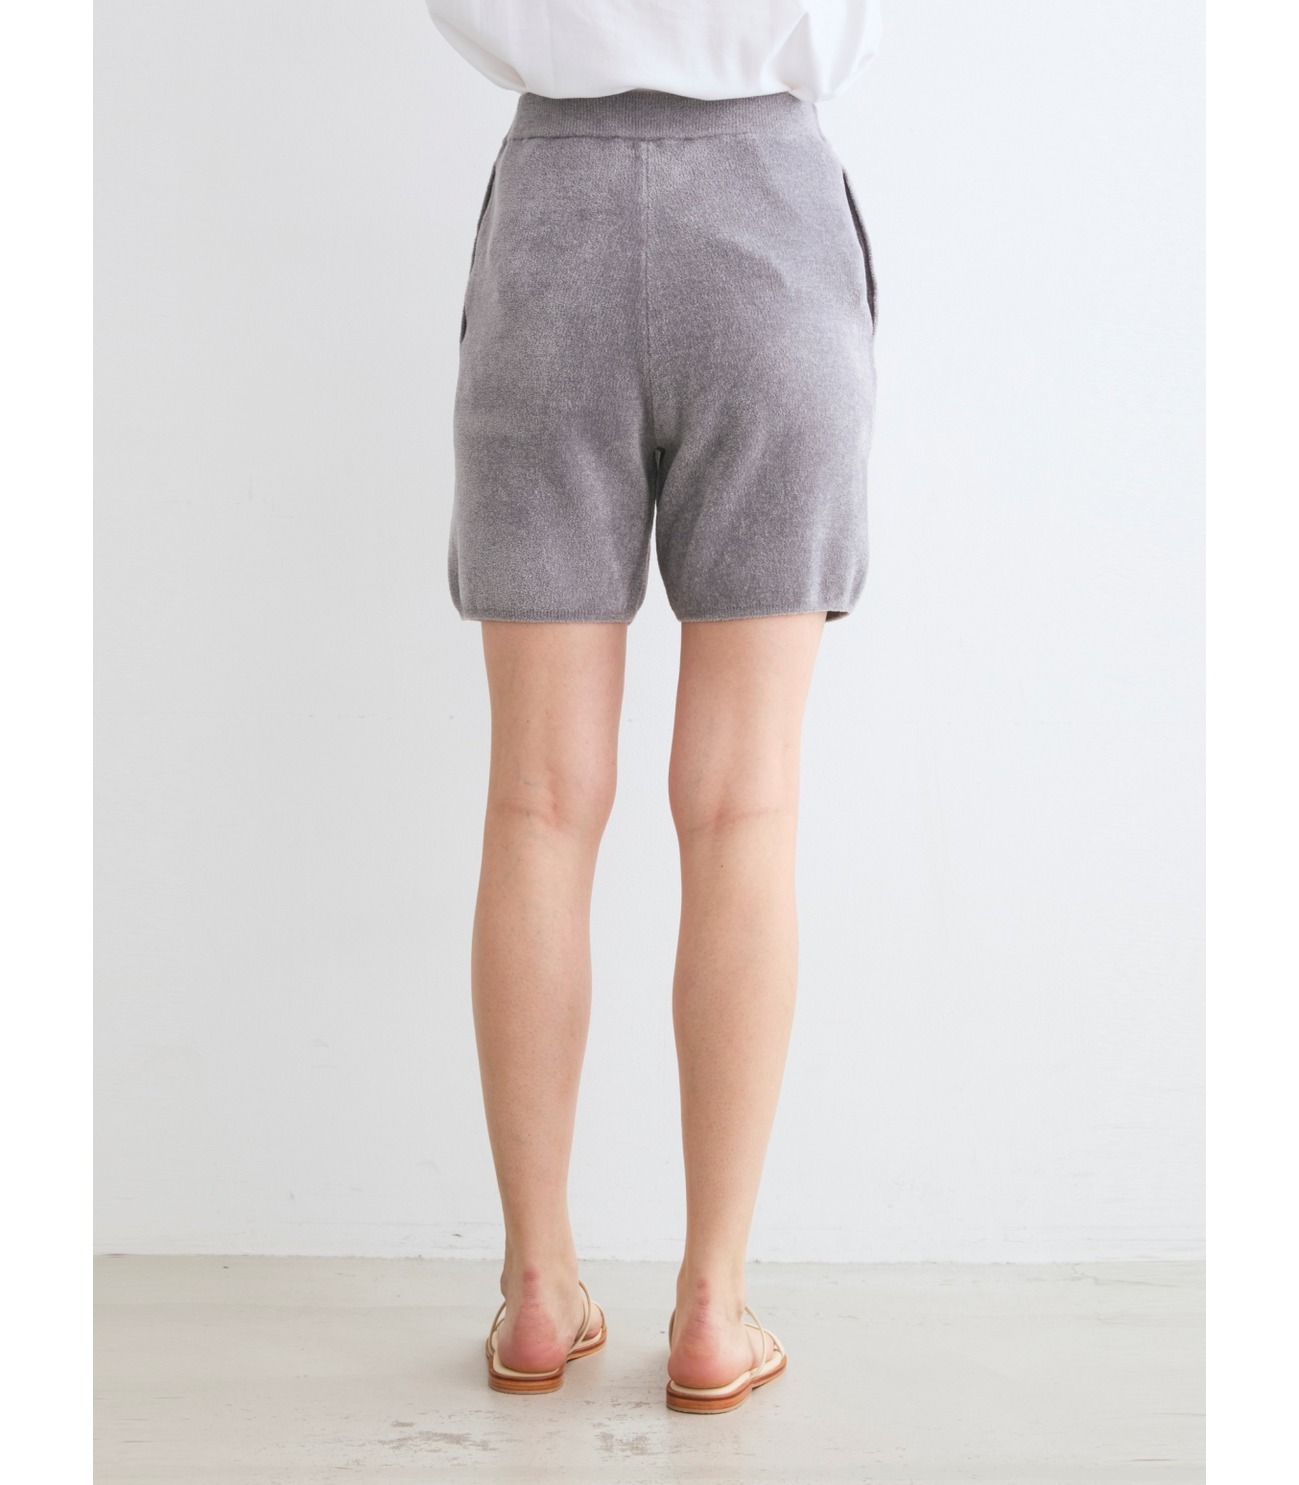 Unisex premium pile shorts 詳細画像 ivory 17